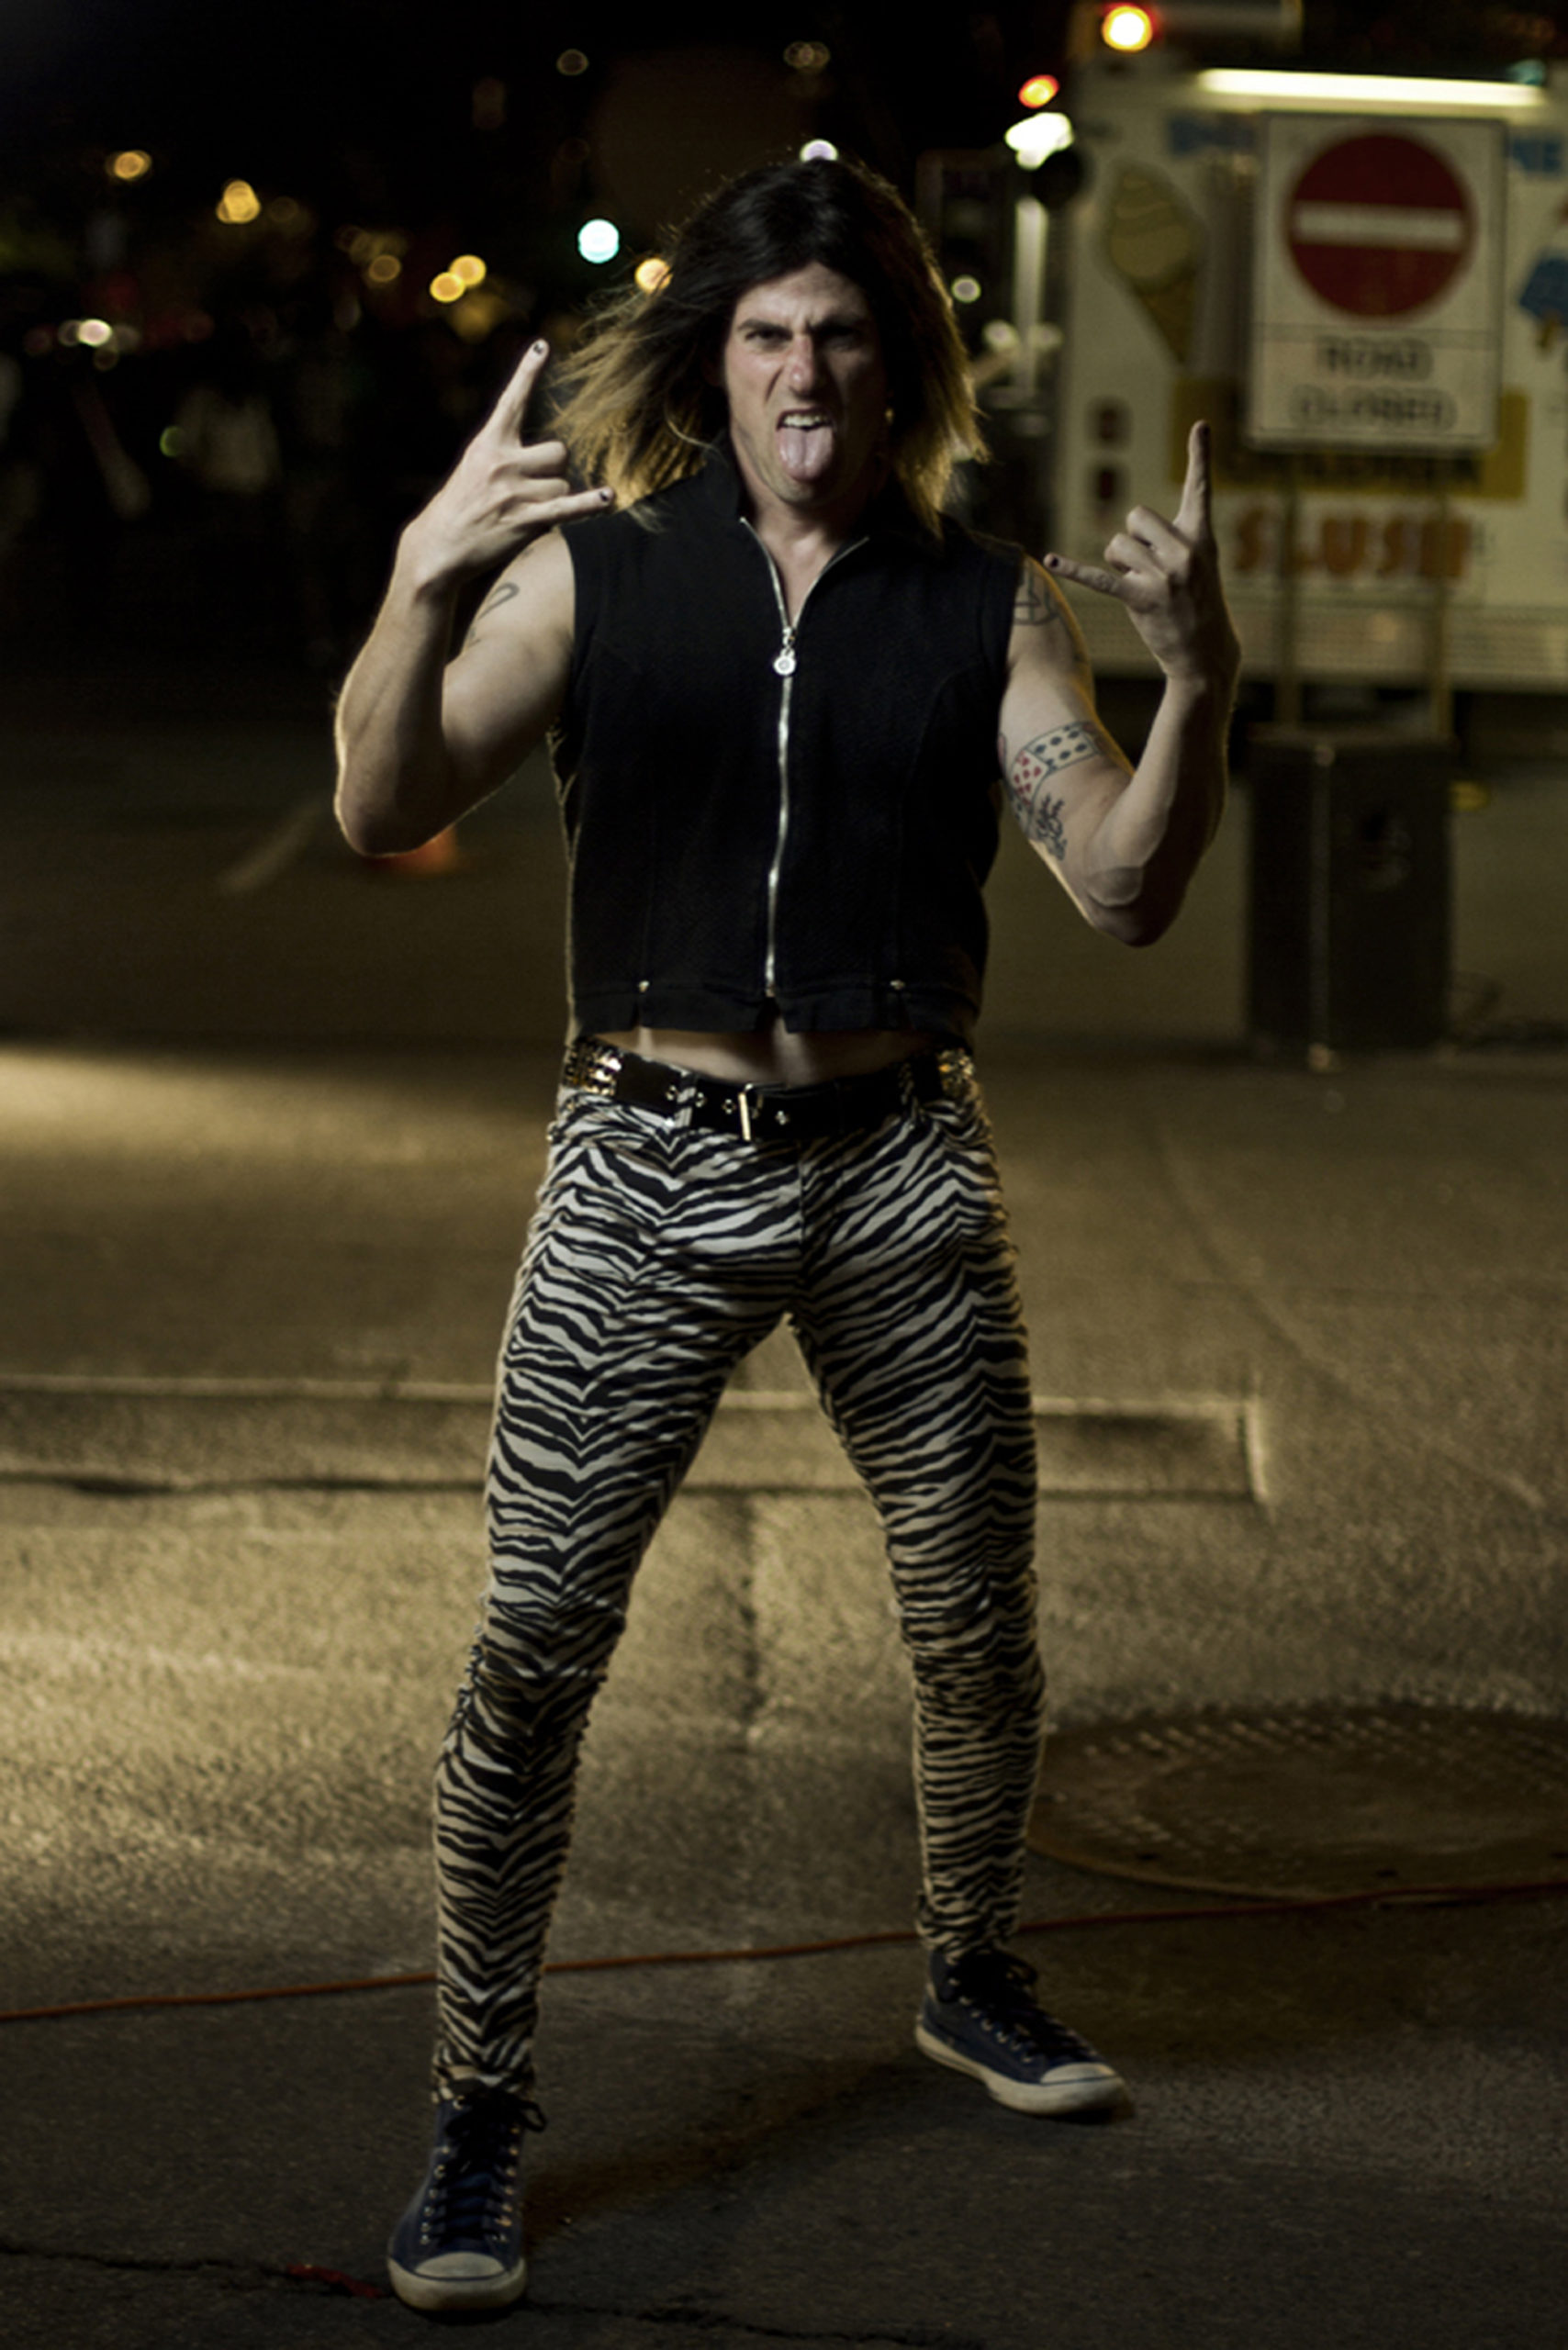 Nigel Blackstorm in a heavy metal pose on the street